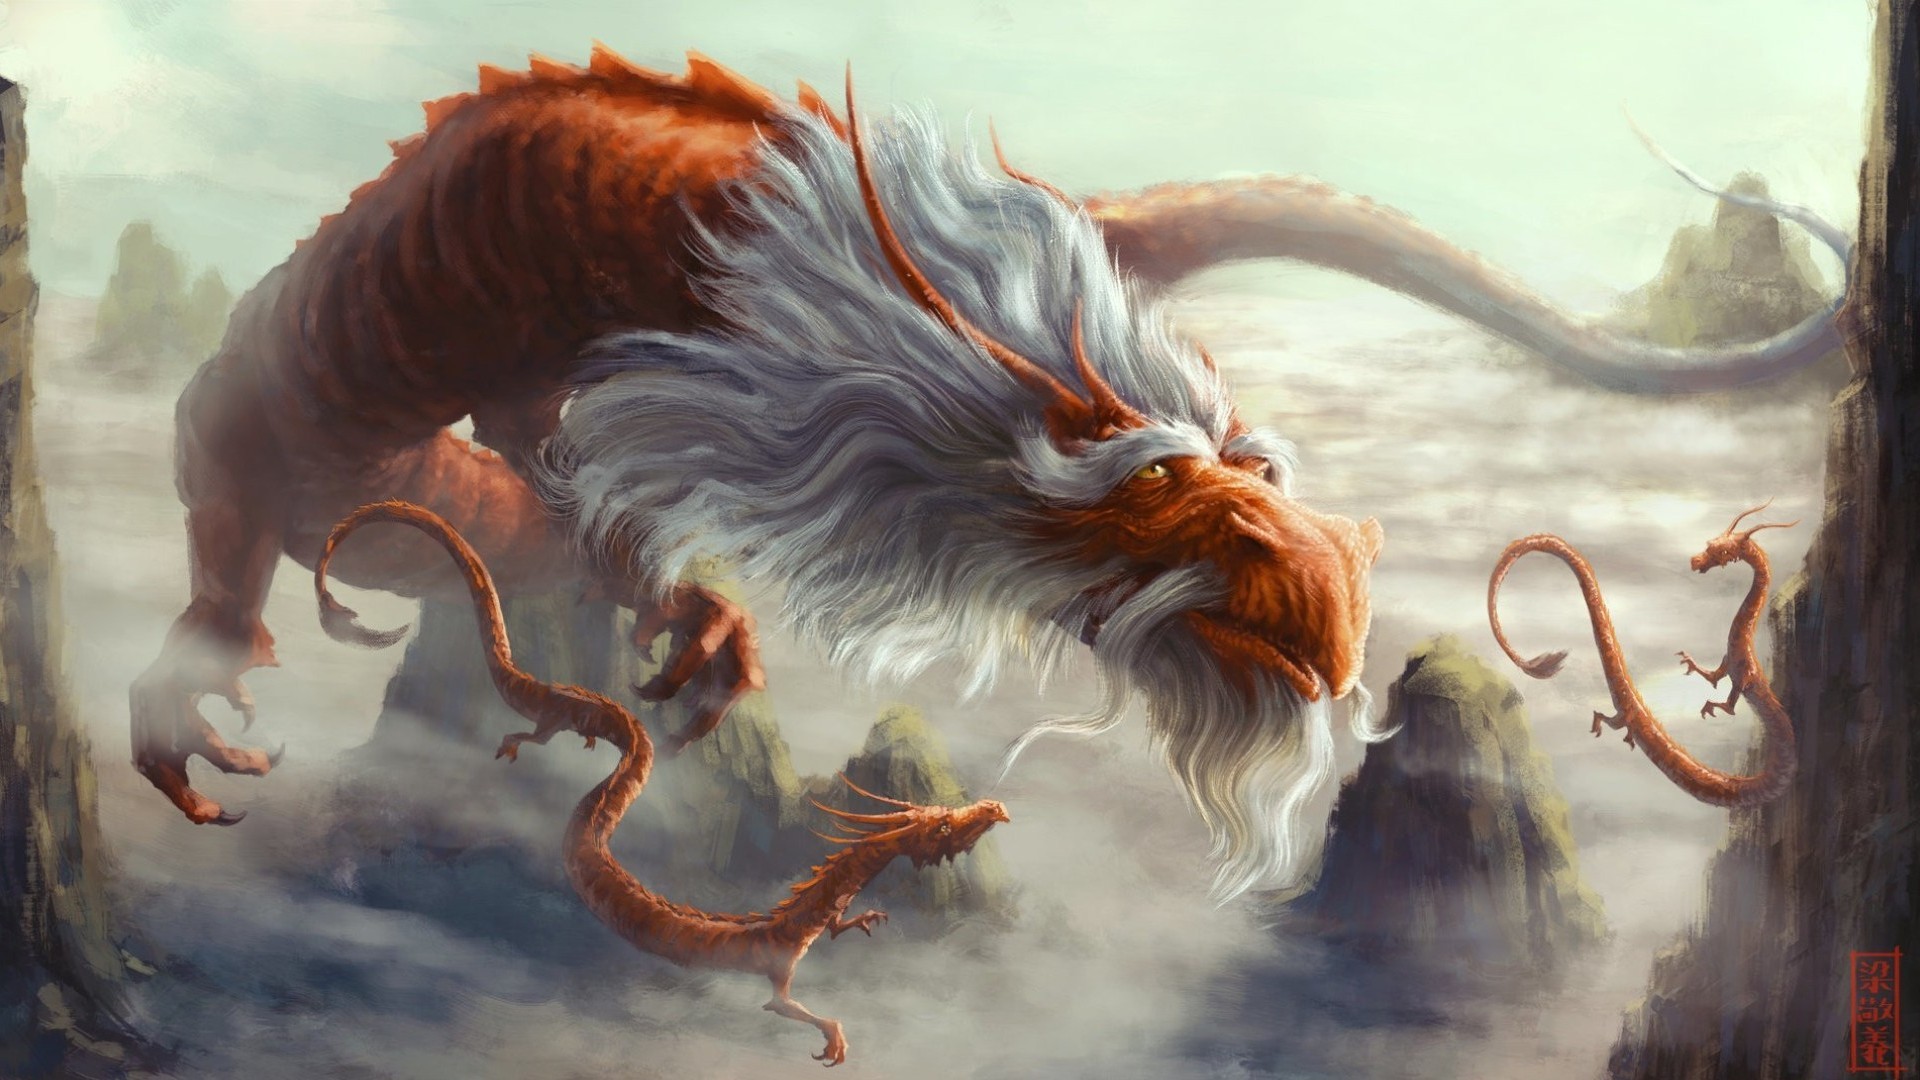 dragon wallpaper hd,cg artwork,mythology,fictional character,illustration,tail